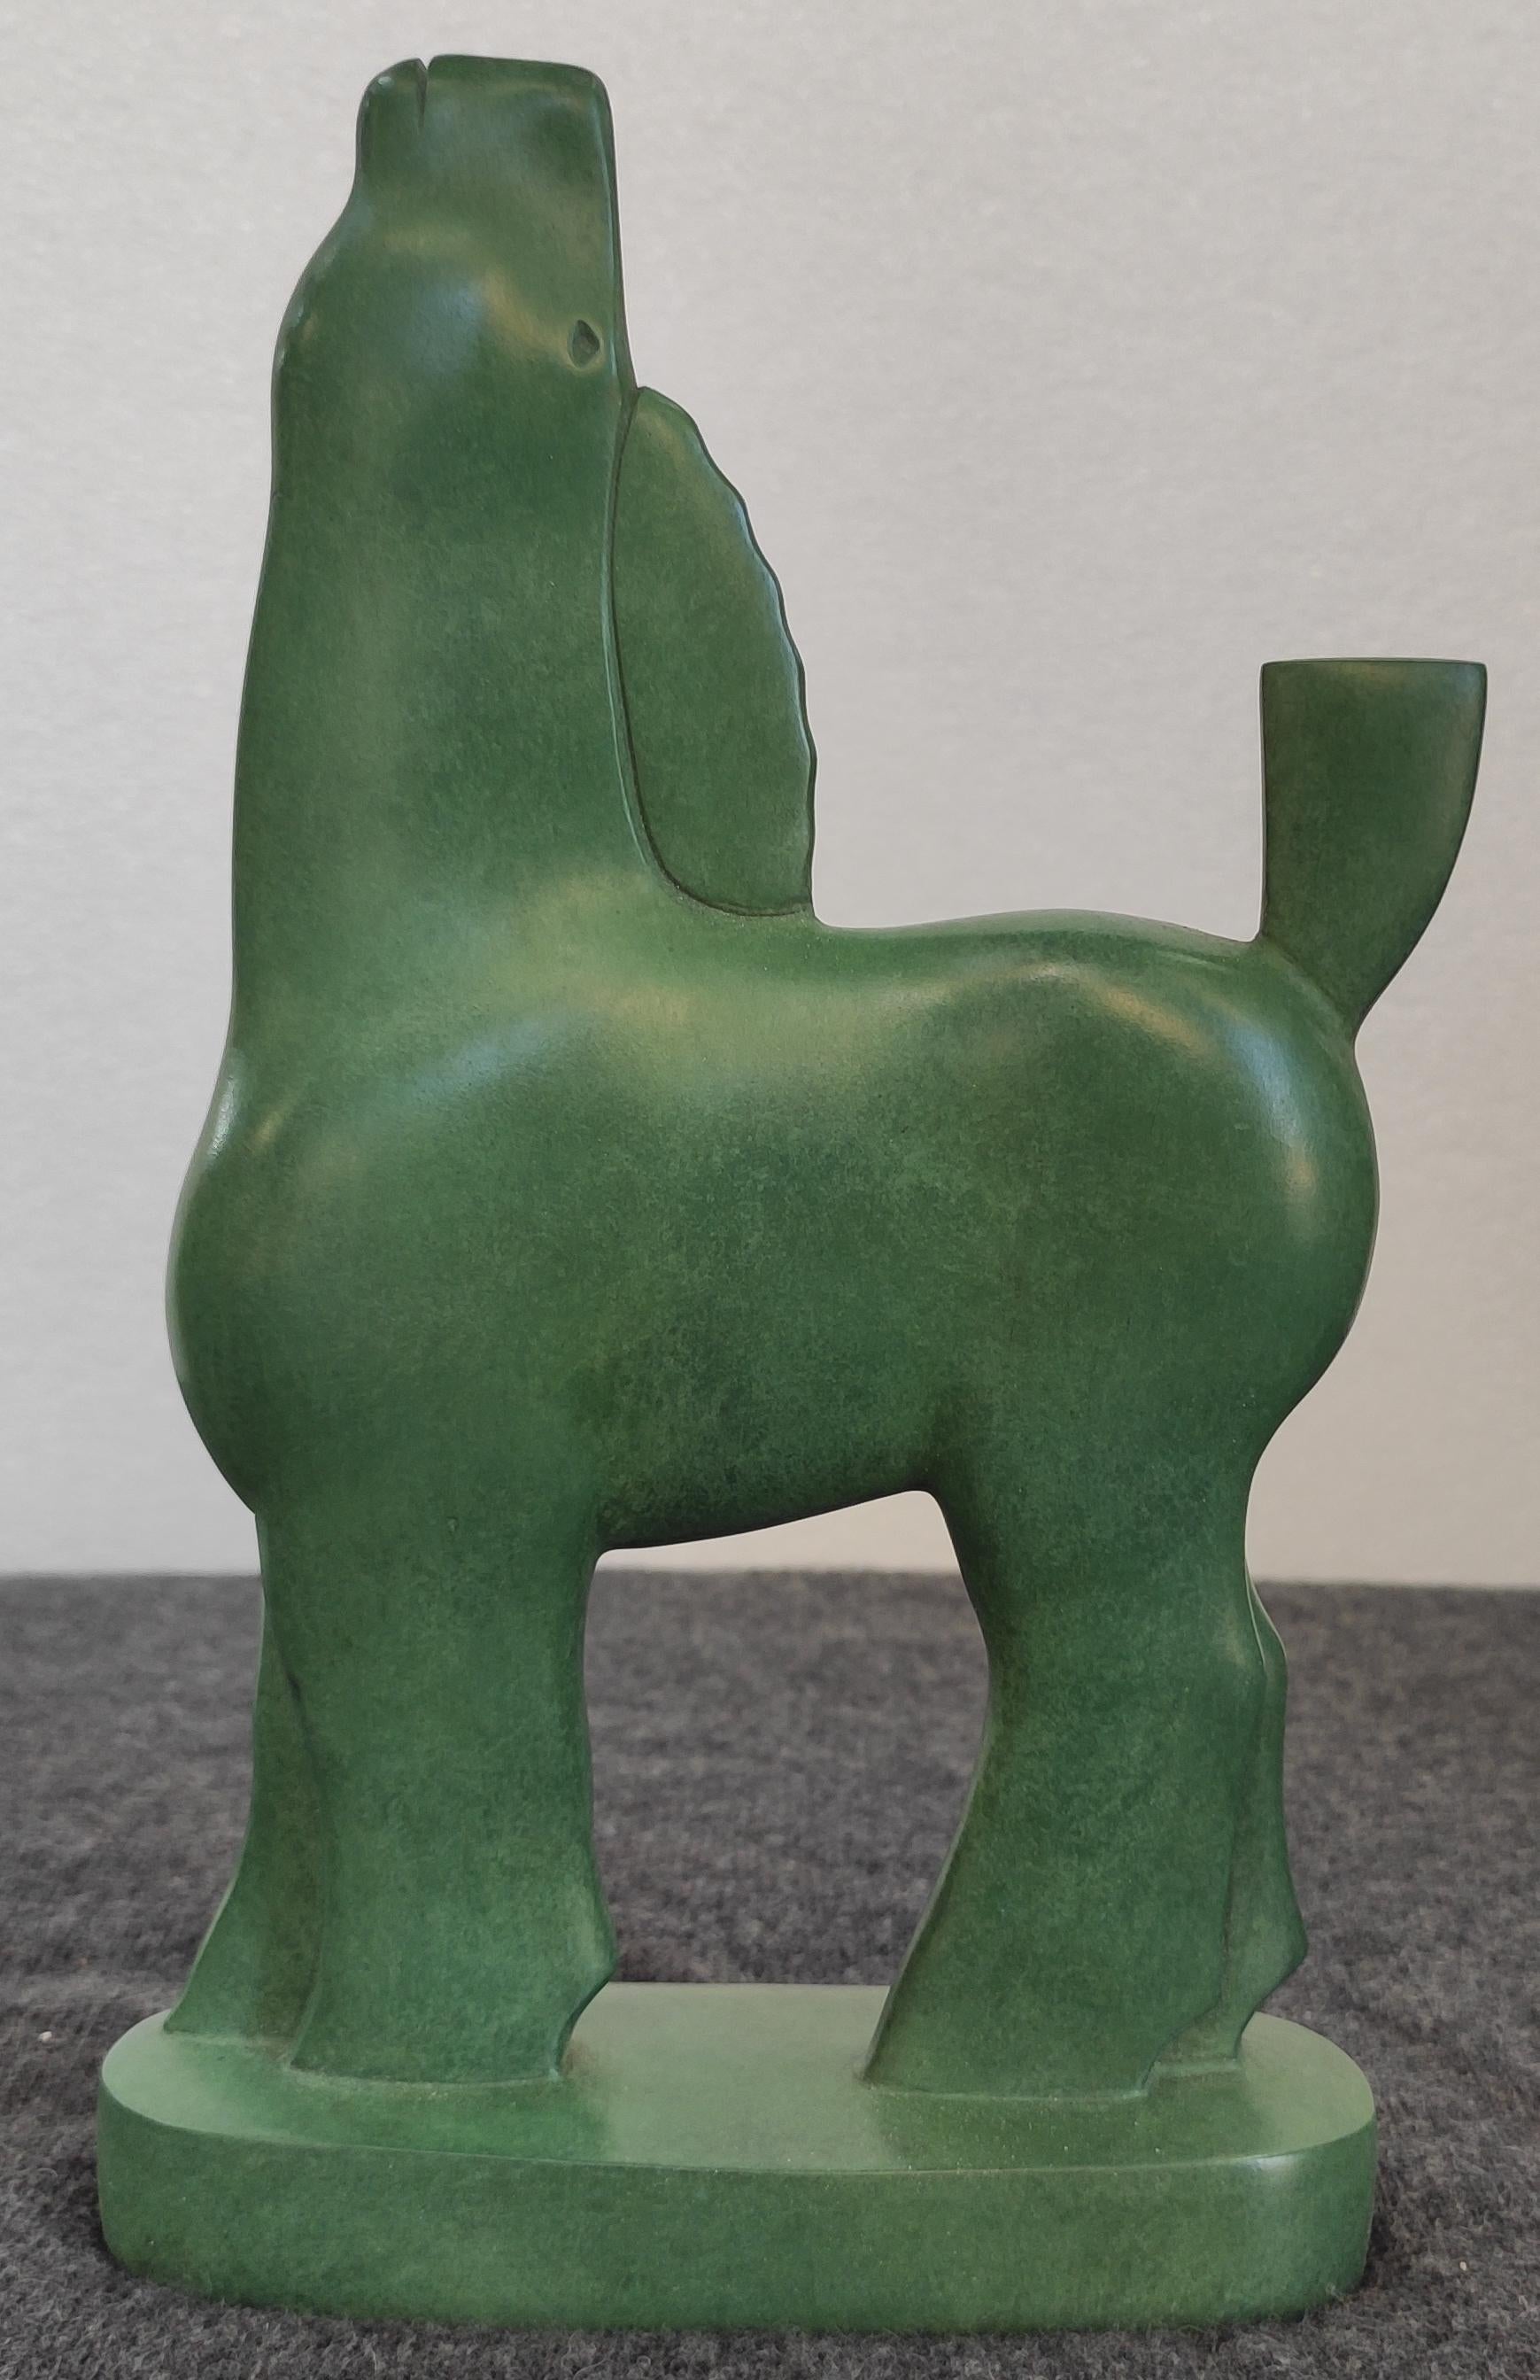 KOBE Figurative Sculpture – Alles Omhoog Bronze-Skulptur Alles auf dem Luftpferd Tier, auf Lager 